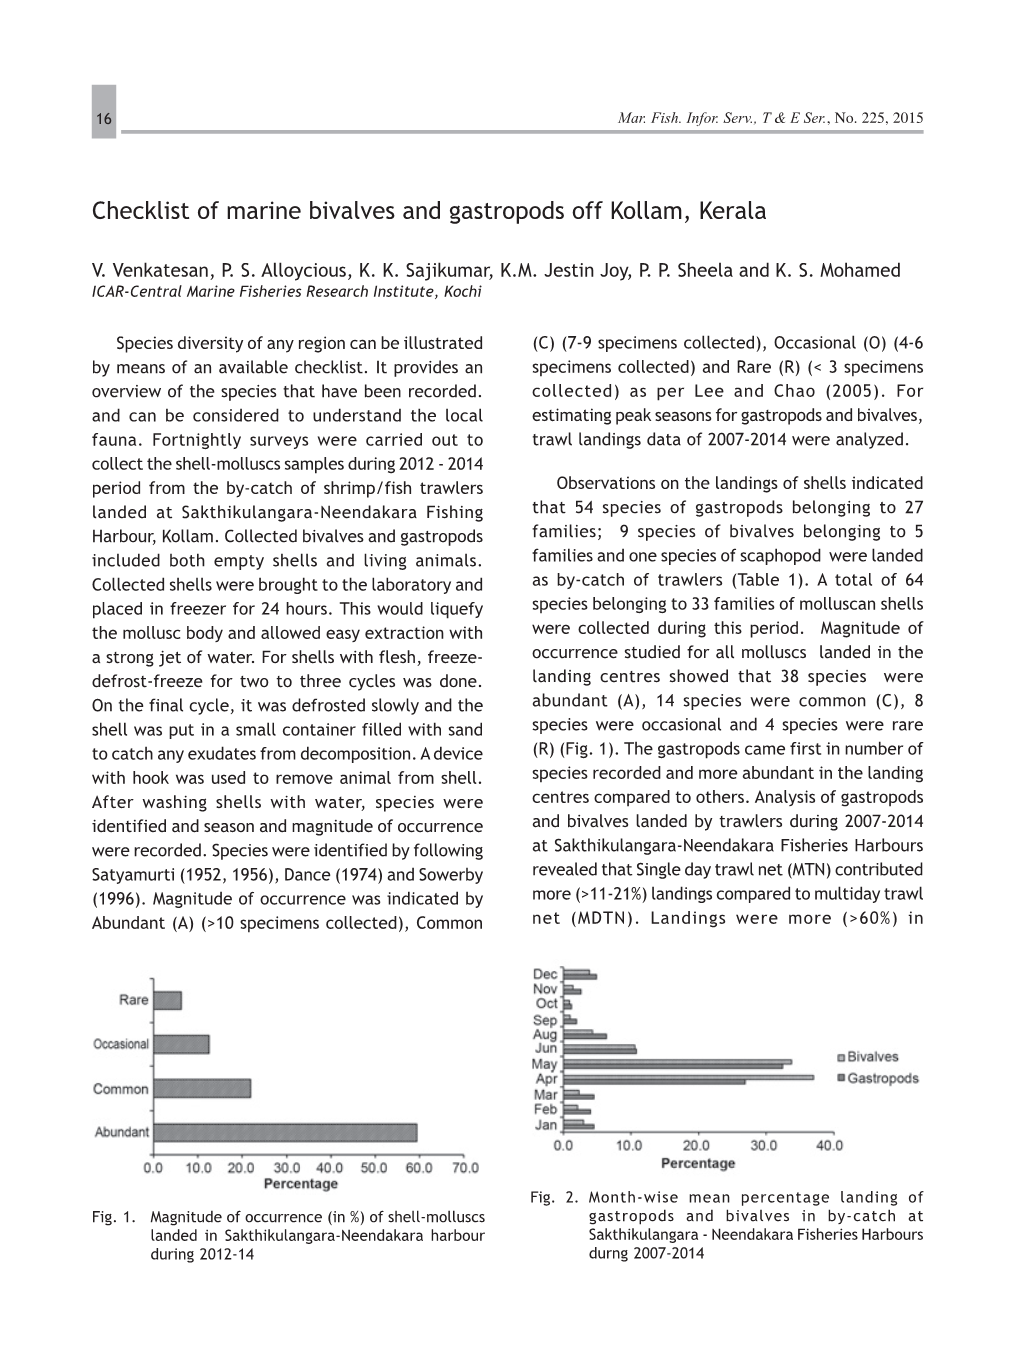 Checklist of Marine Bivalves and Gastropods Off Kollam, Kerala